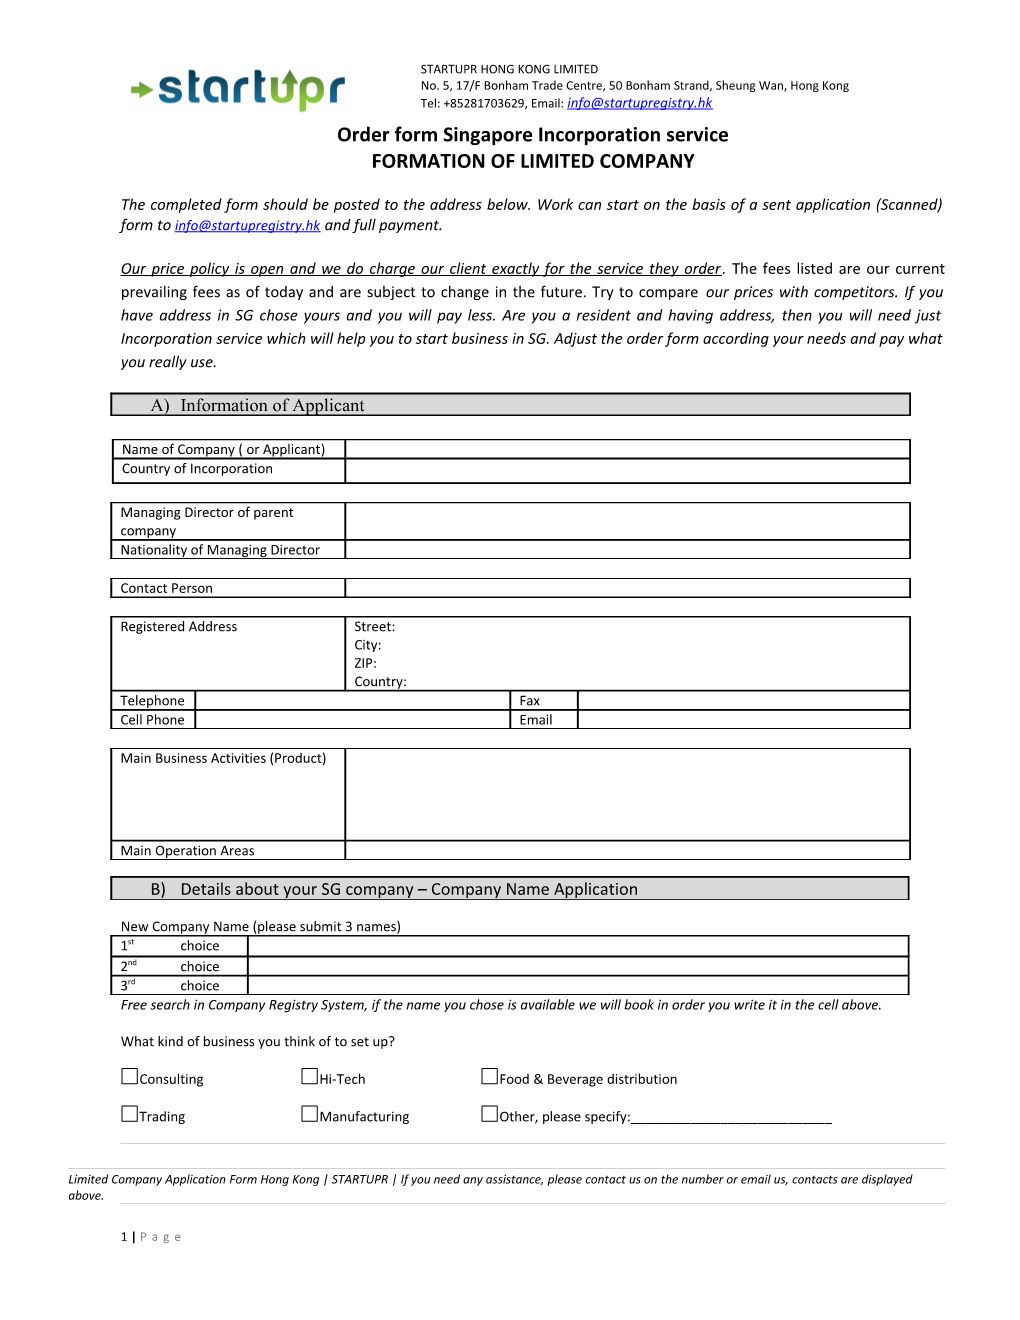 Order Form Singapore Incorporation Service